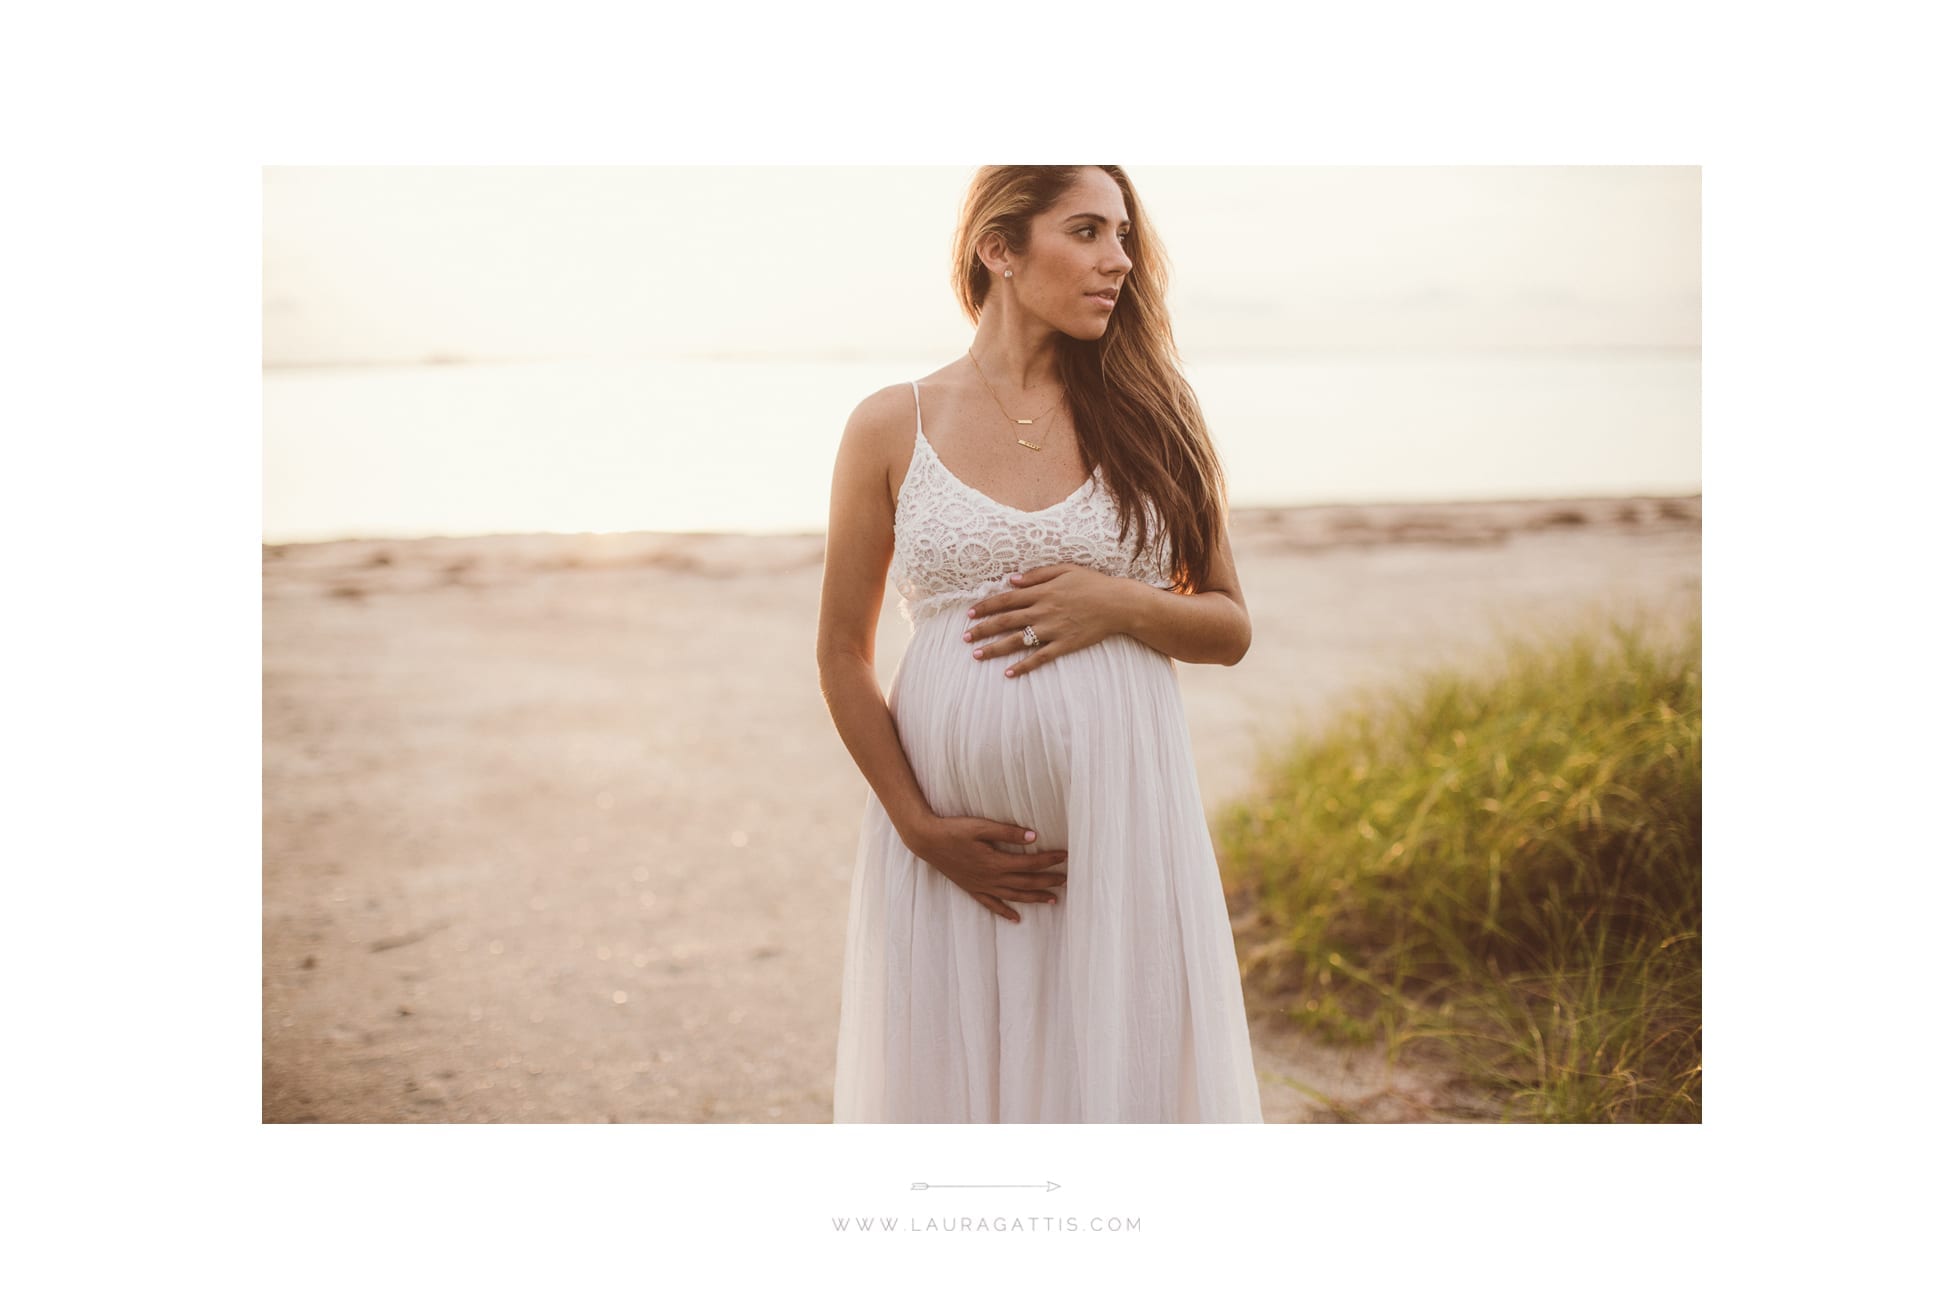 natural light beach maternity session | laura gattis photography